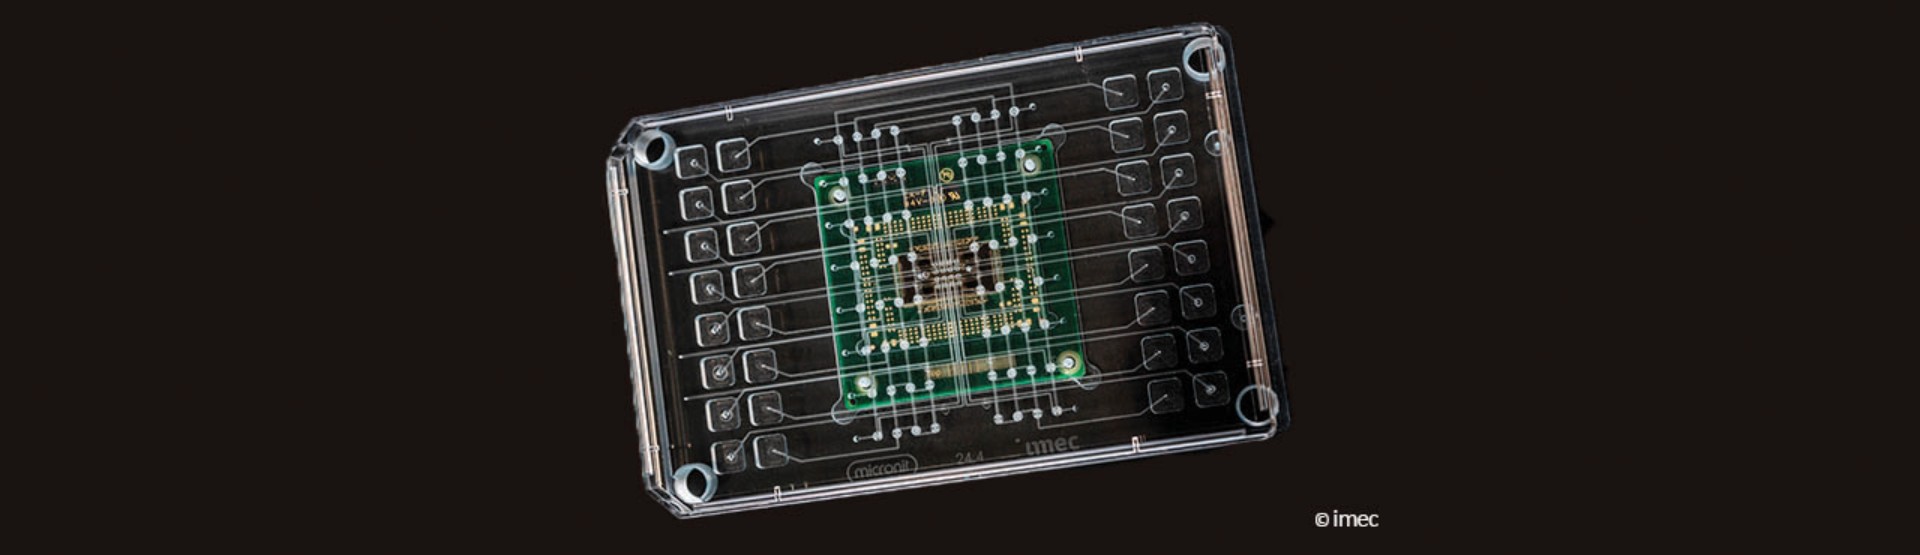 Smart Organ-on-Chip plate for drug testing